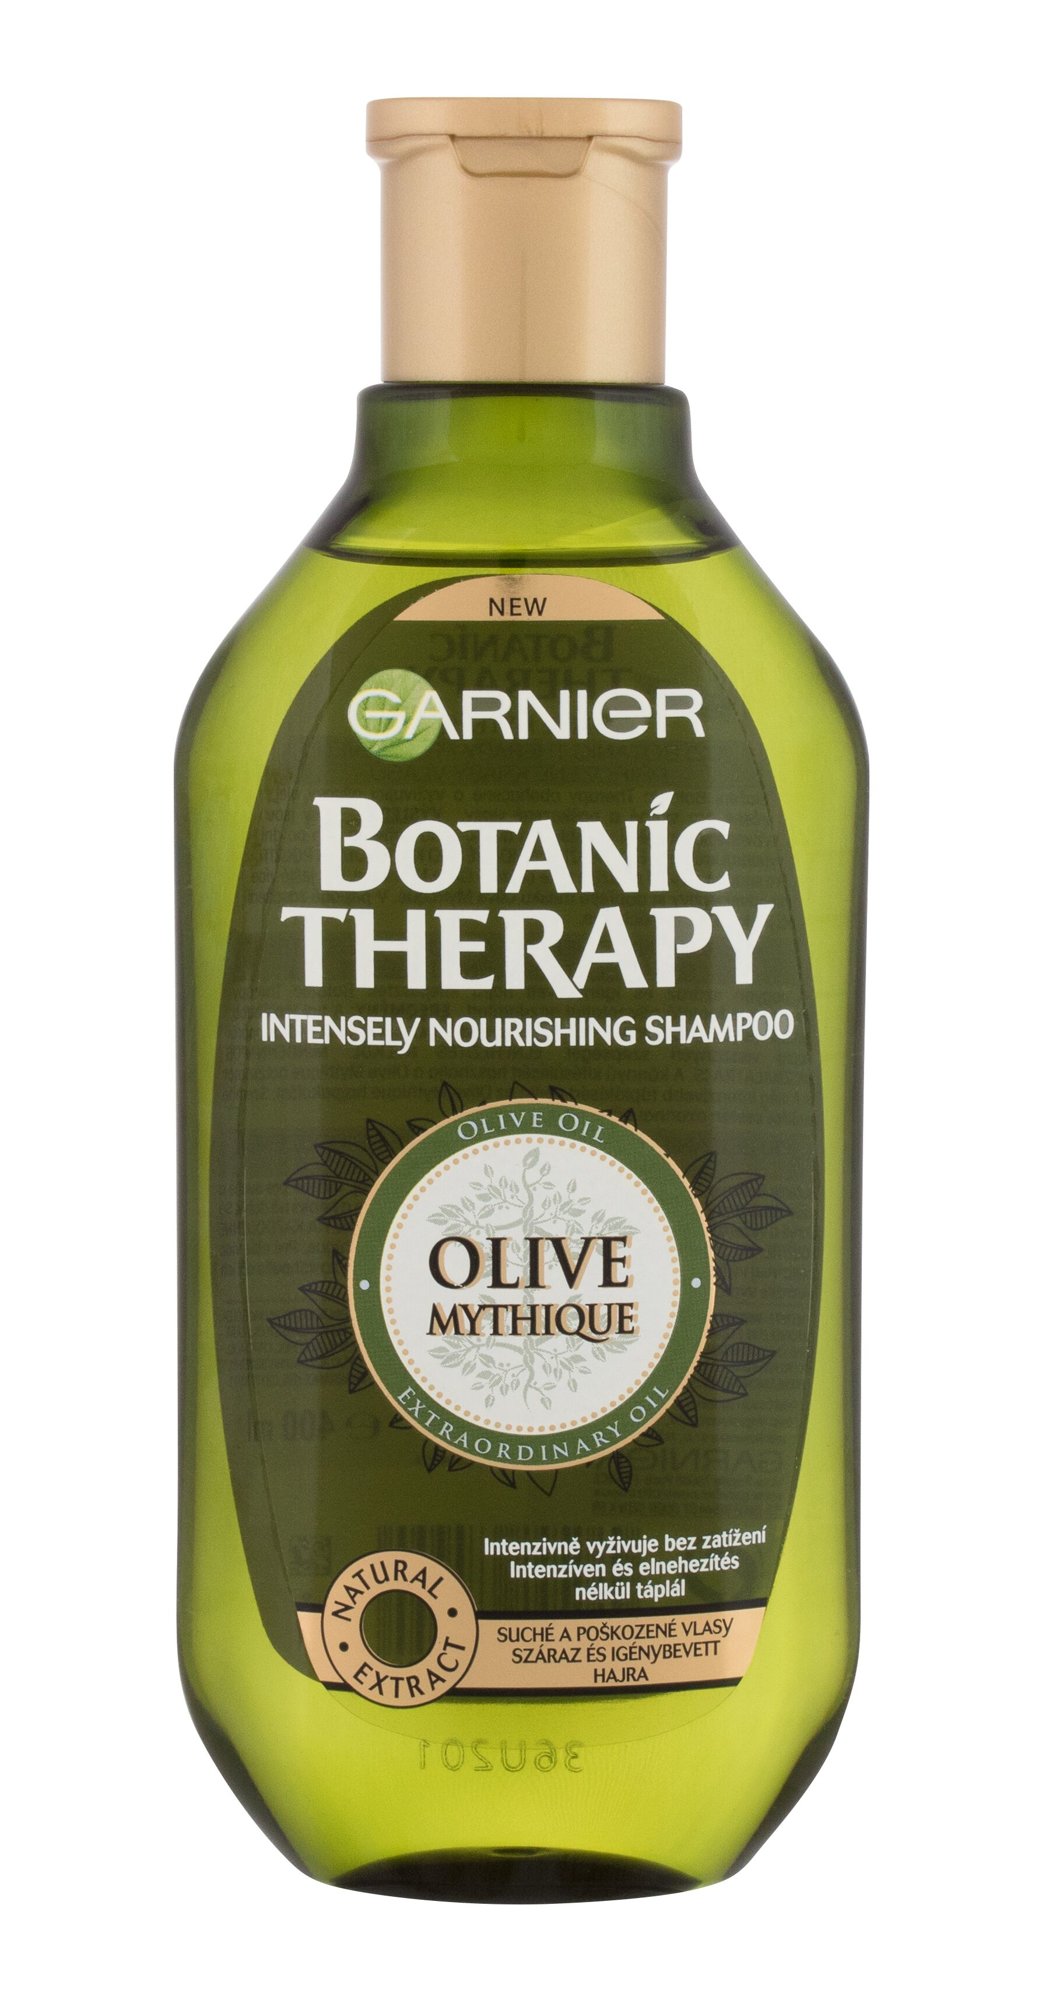 Garnier Botanic Therapy Olive Mythique 400ml šampūnas